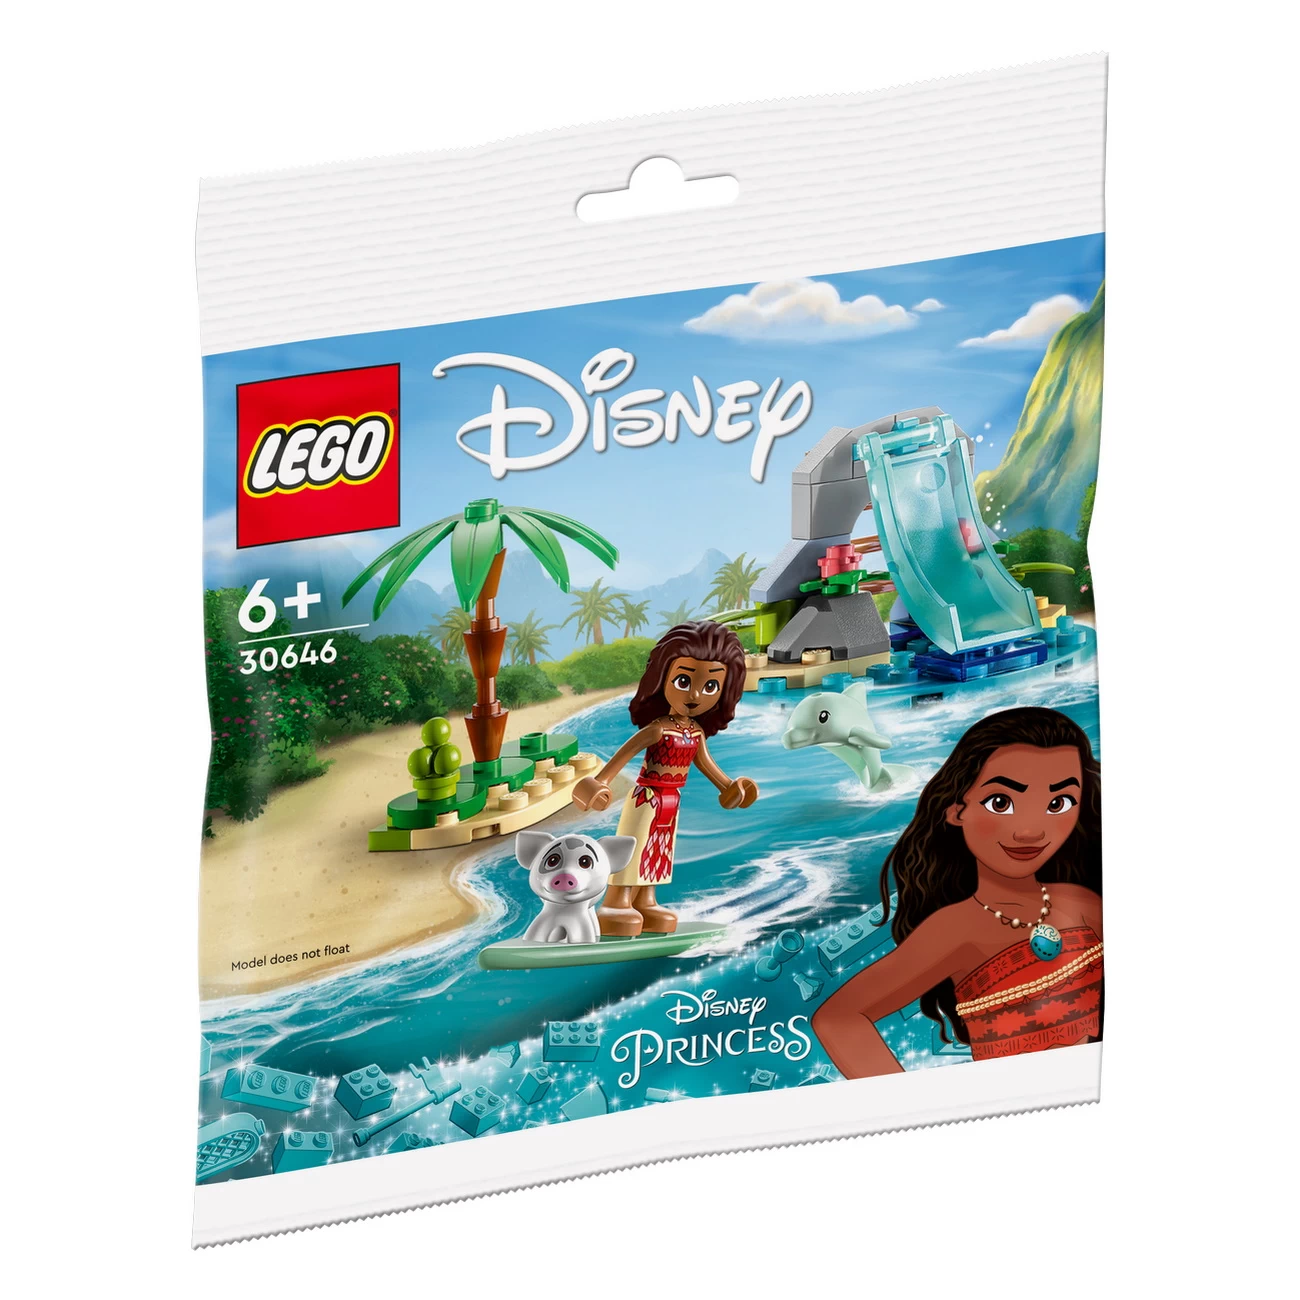 LEGO Disney - Vaianas Delfinbucht (30646) - Polybag